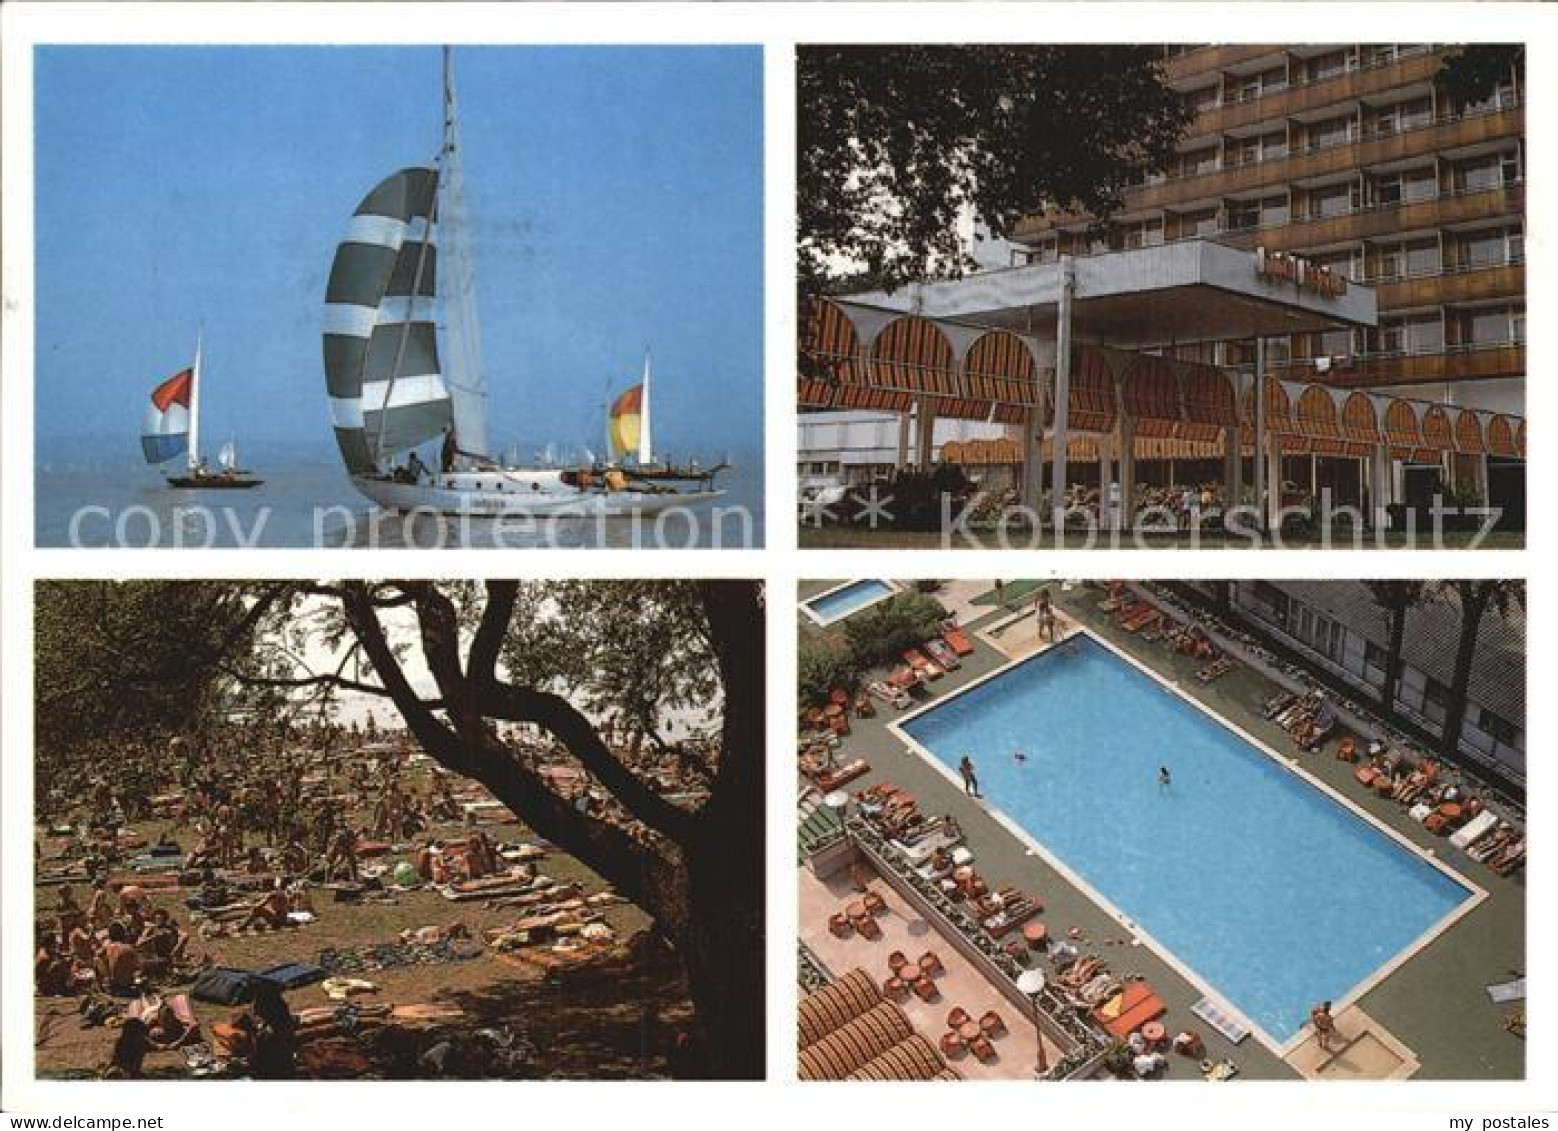 72498751 Balatonfoeldvar Hotel Neptun Segelschiffe Park Pool Budapest - Hungary